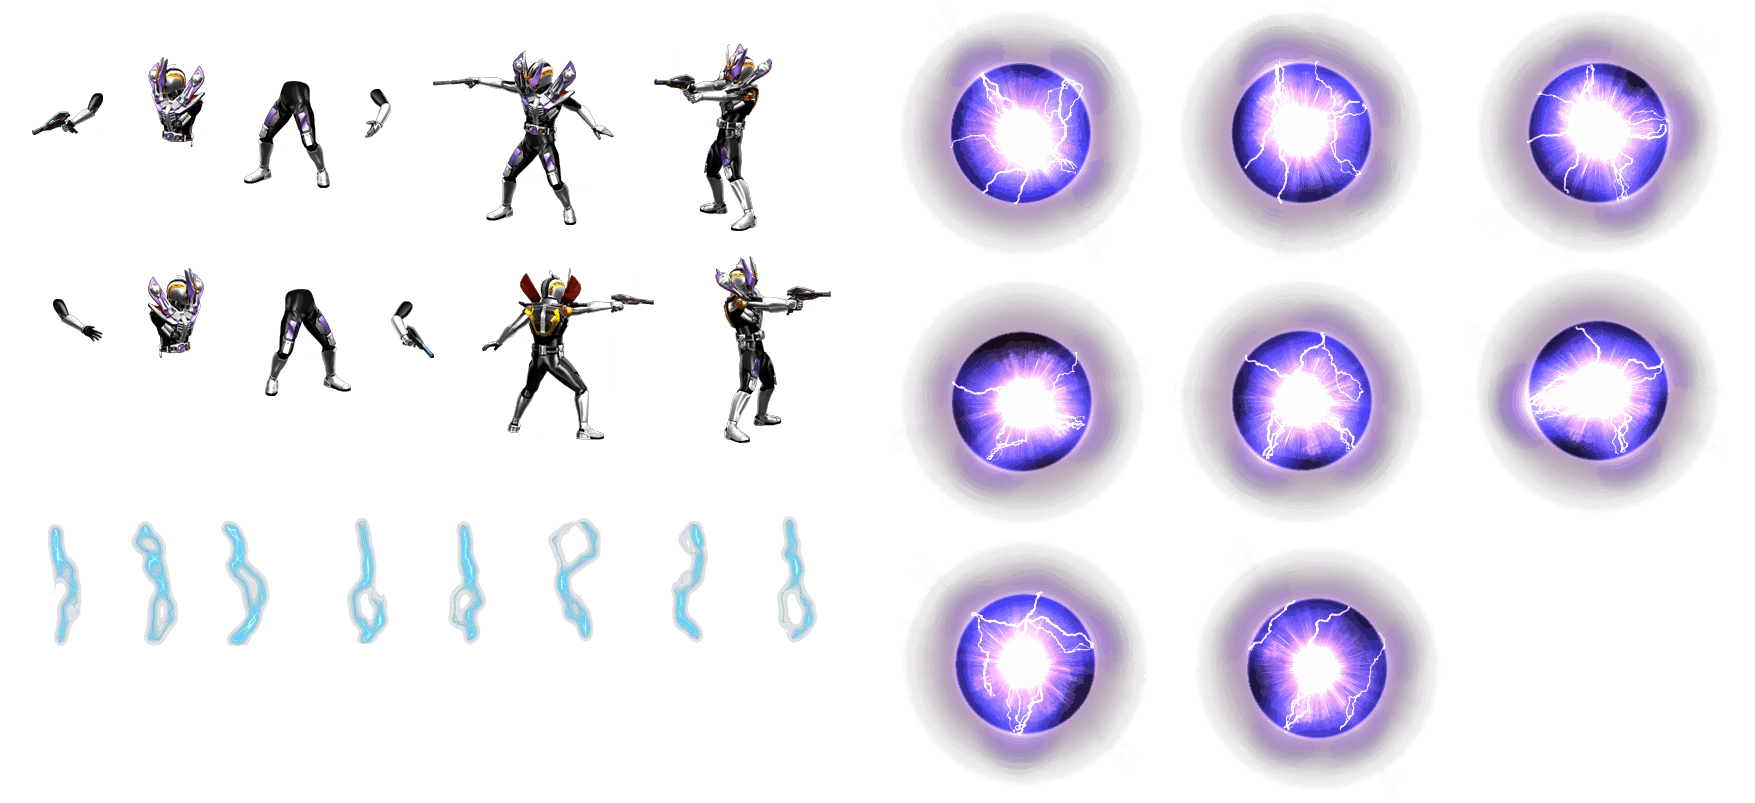 Kamen Rider Den-O Gun Form